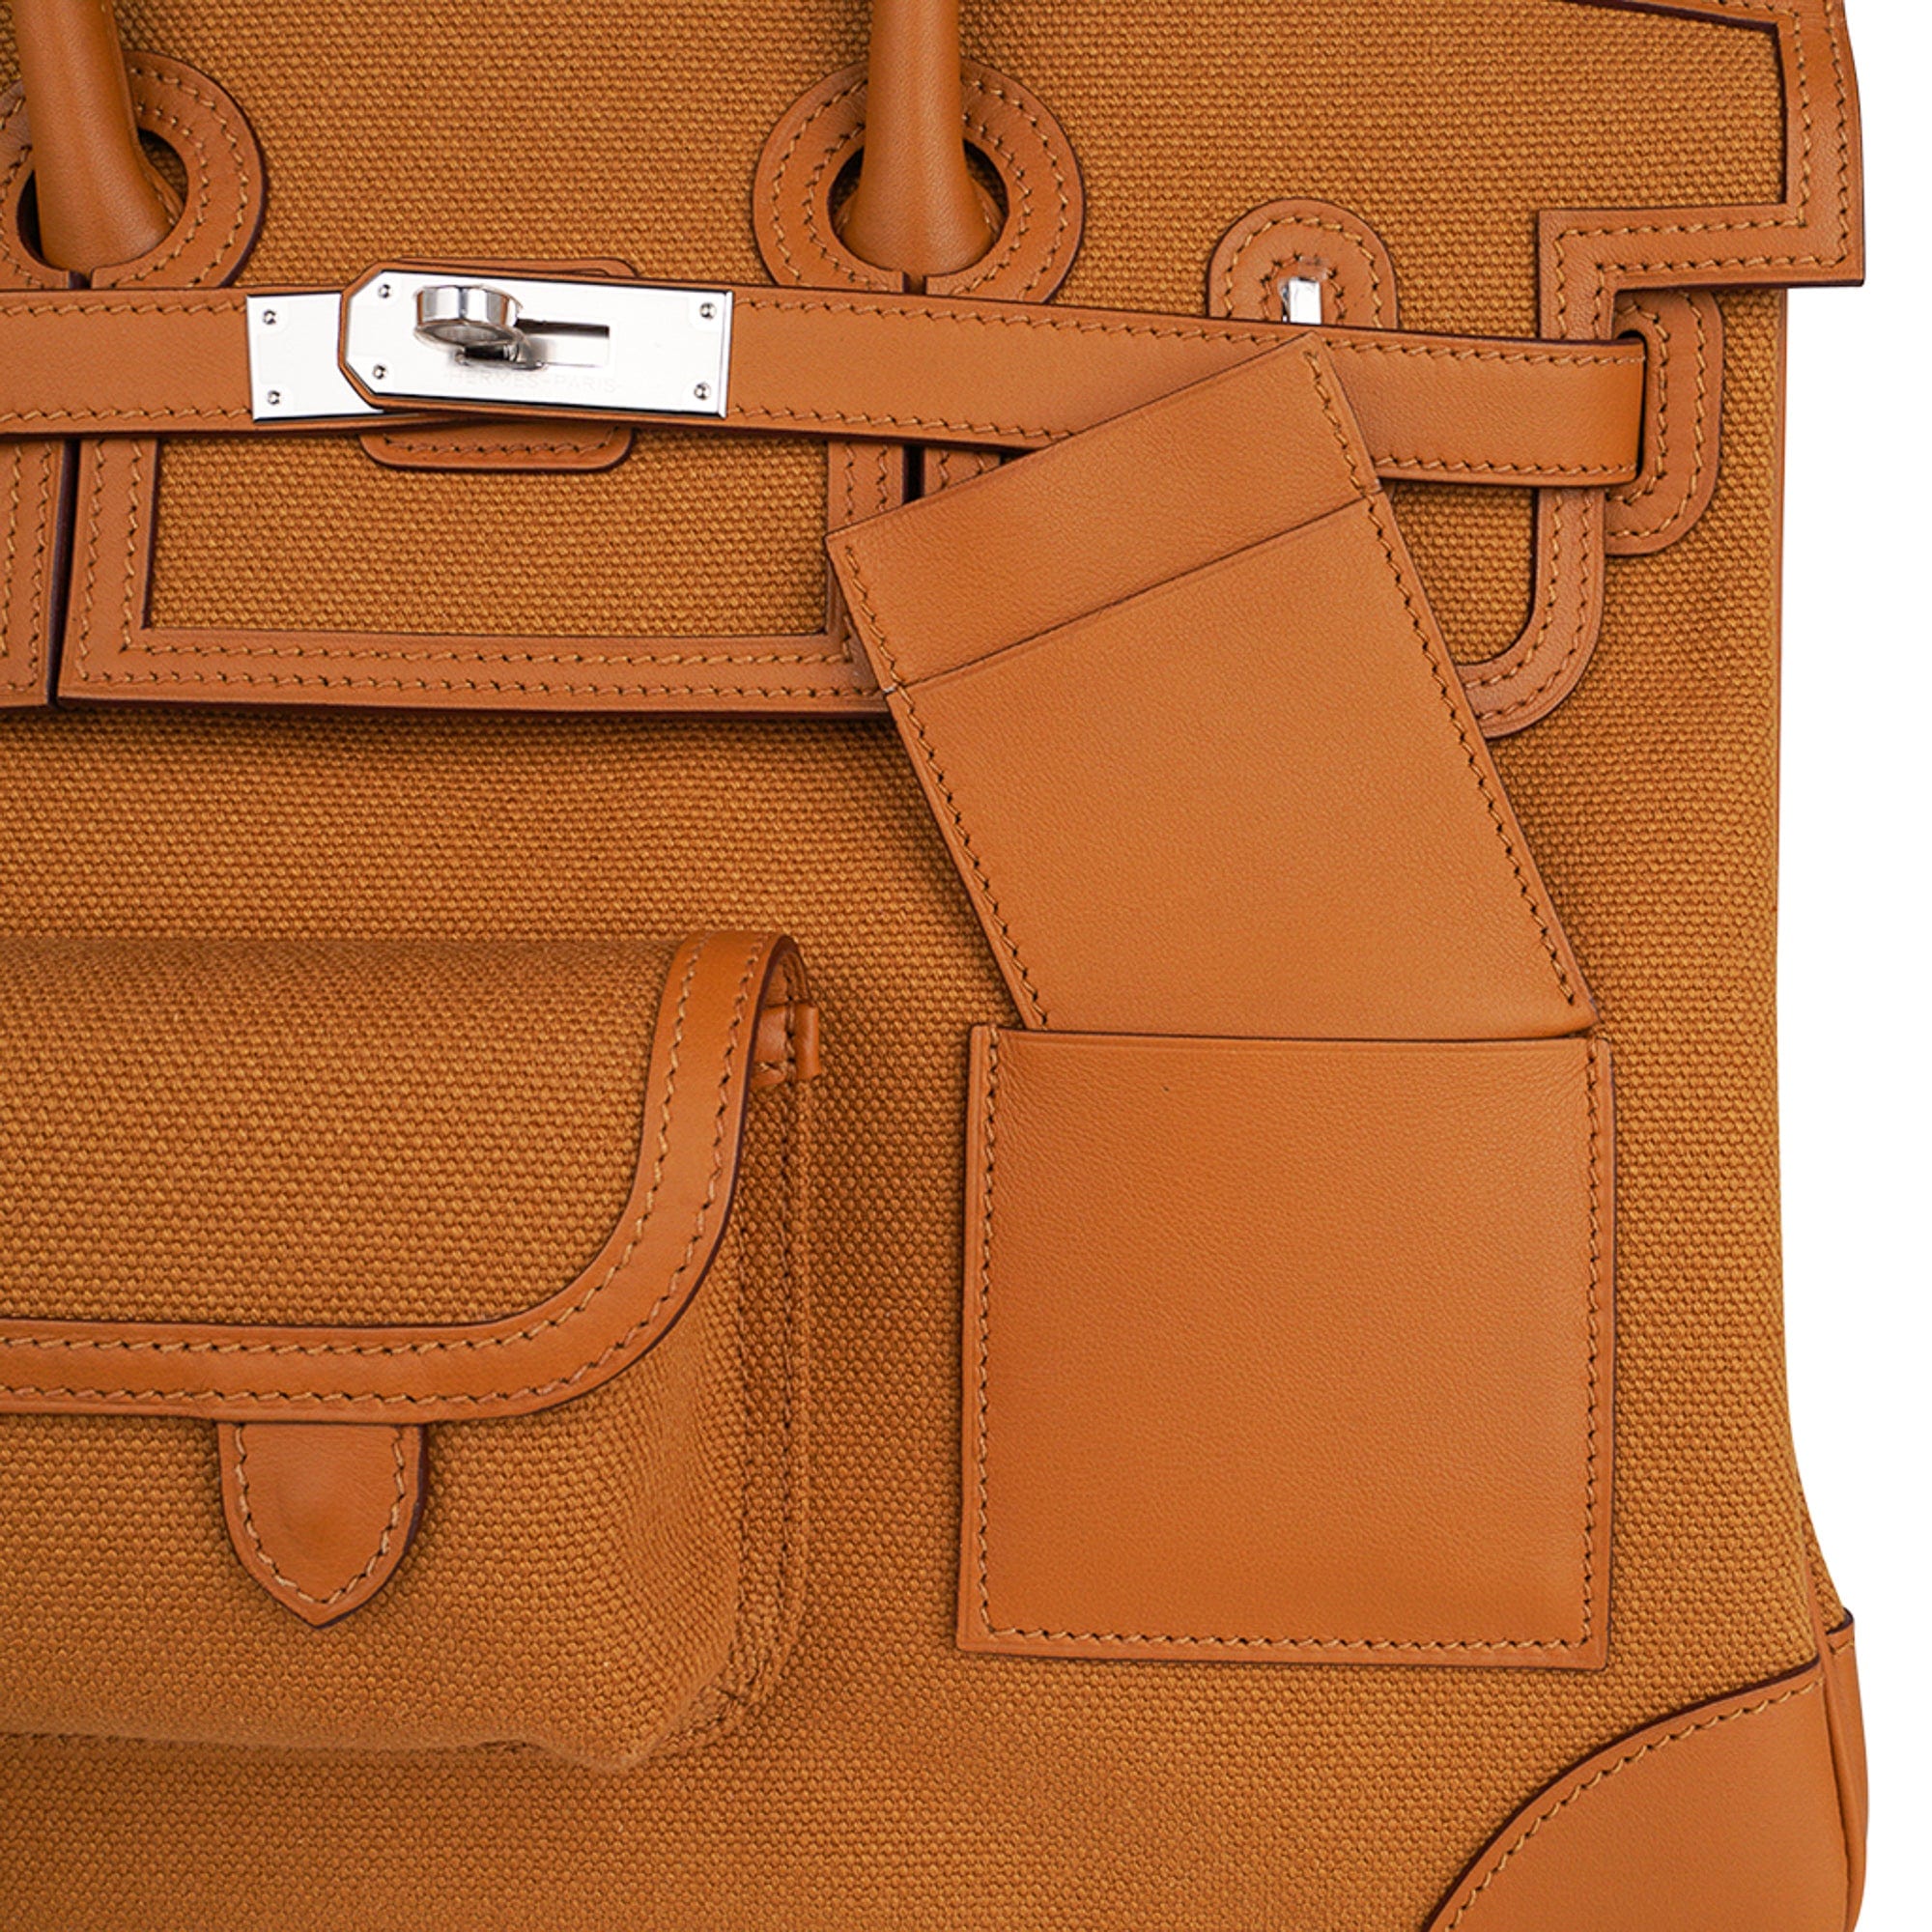 The limited-edition Hermès Birkin Cargo: Utilitarian, Sturdy